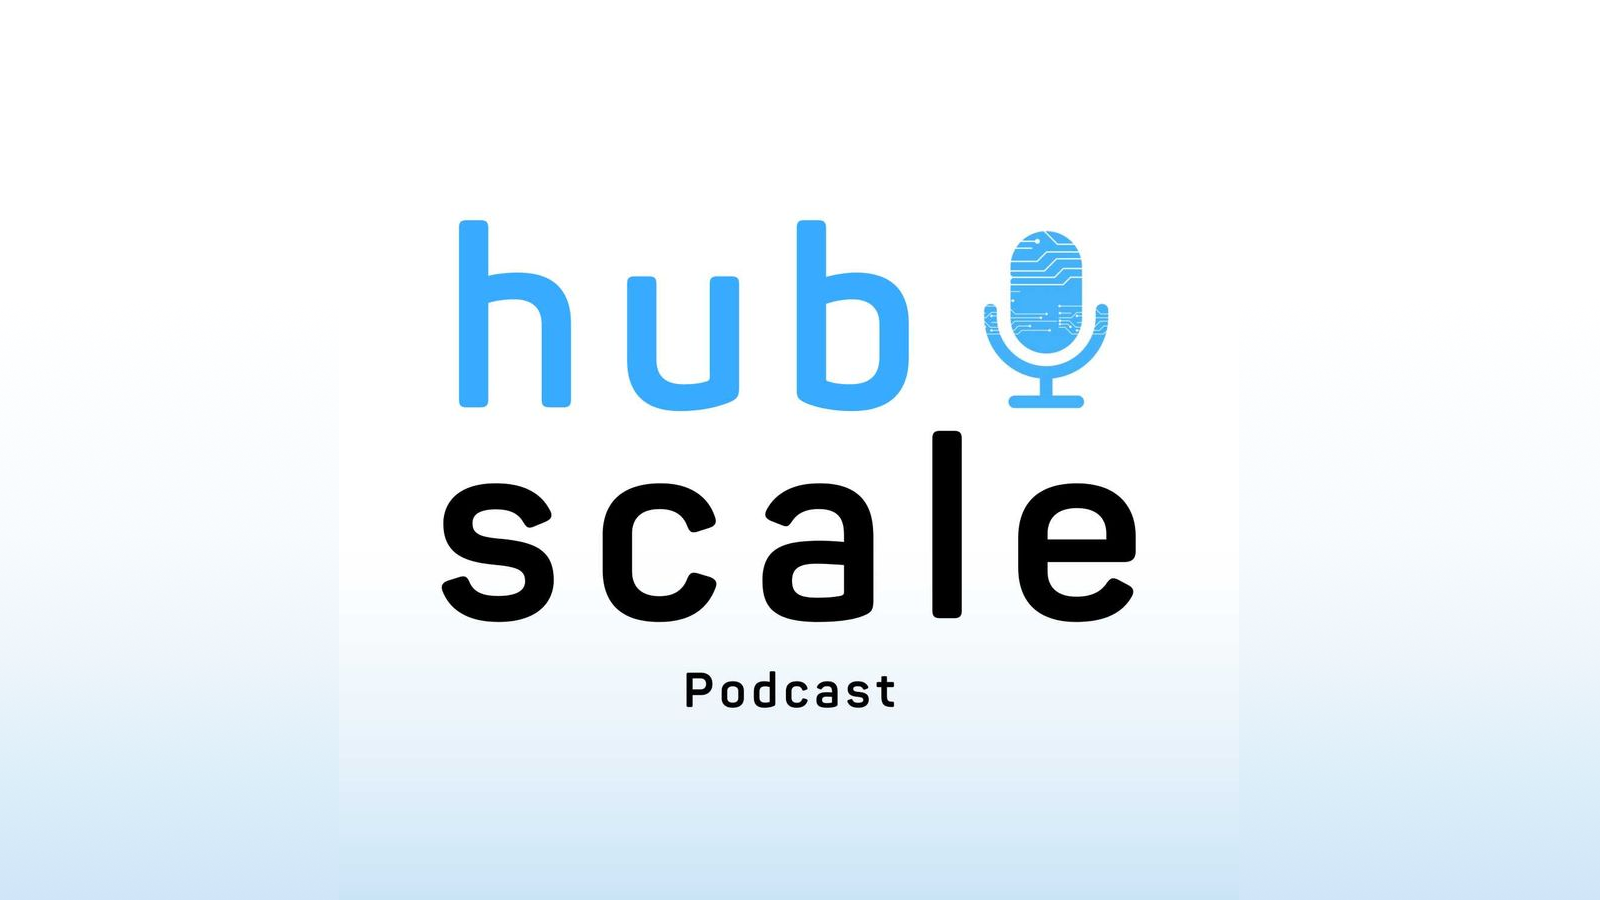 Hub Scale Podcast logo